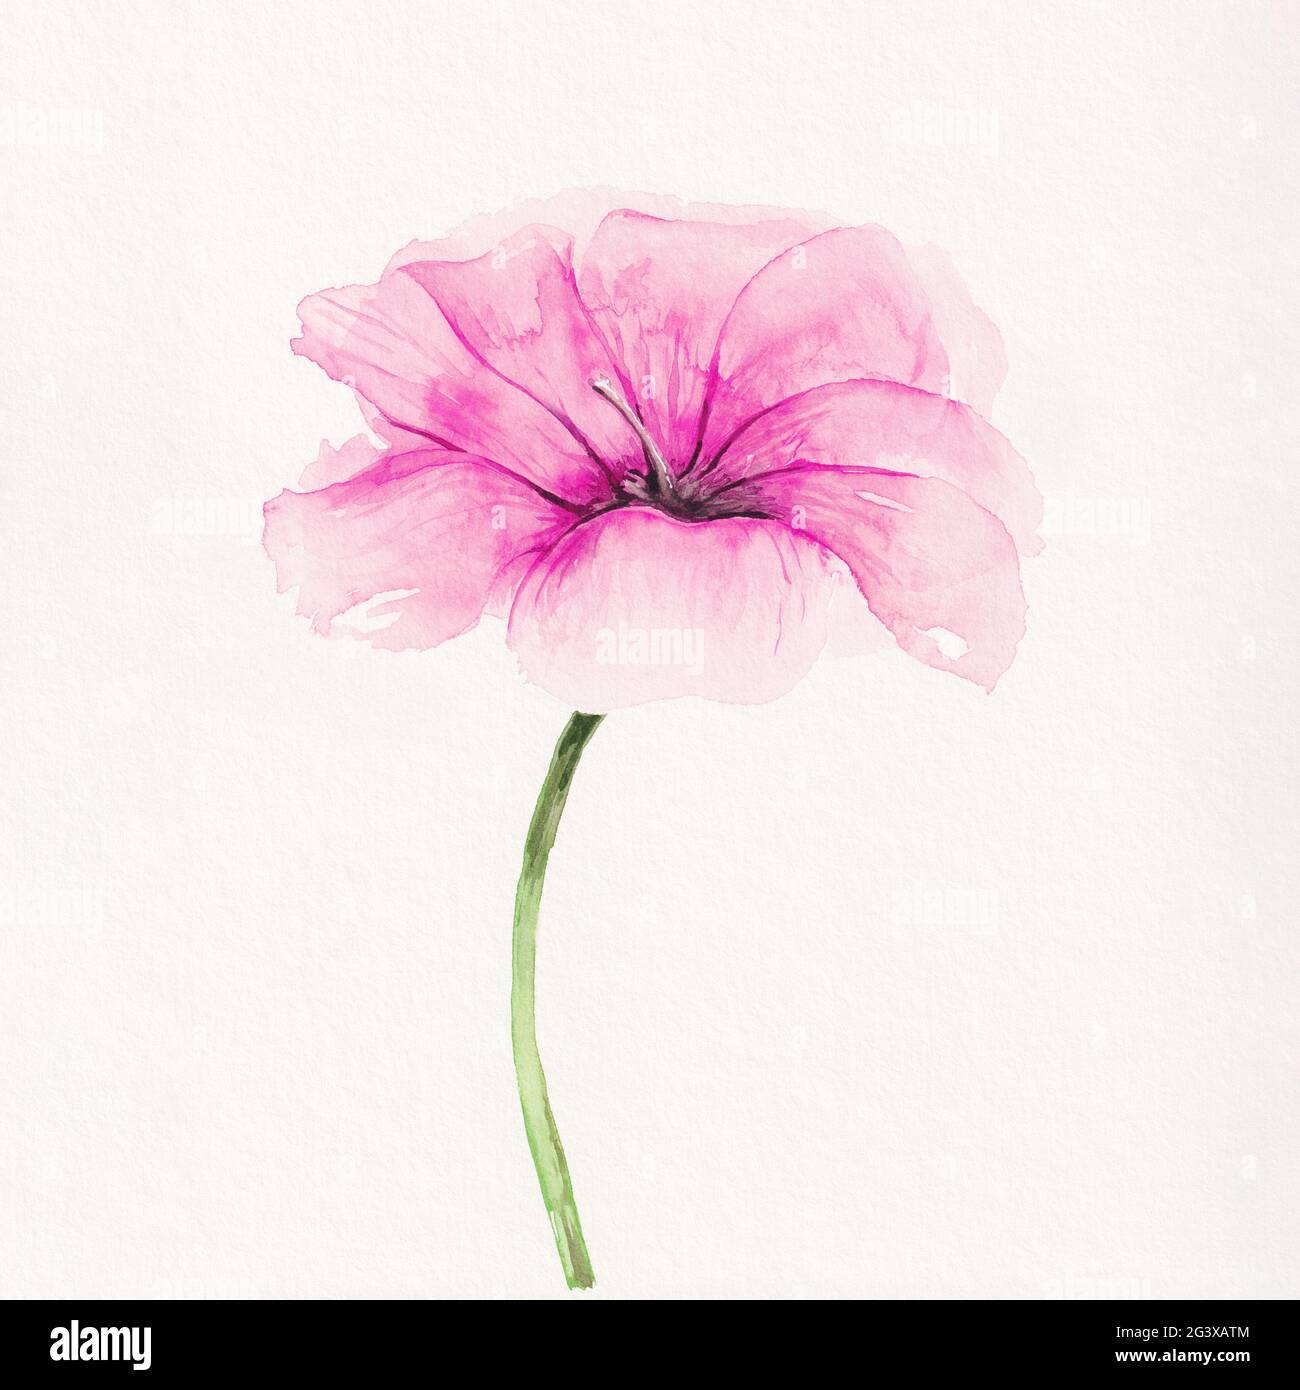 Aquarell-Gemälde einer rosa Blütenblume Stockfoto